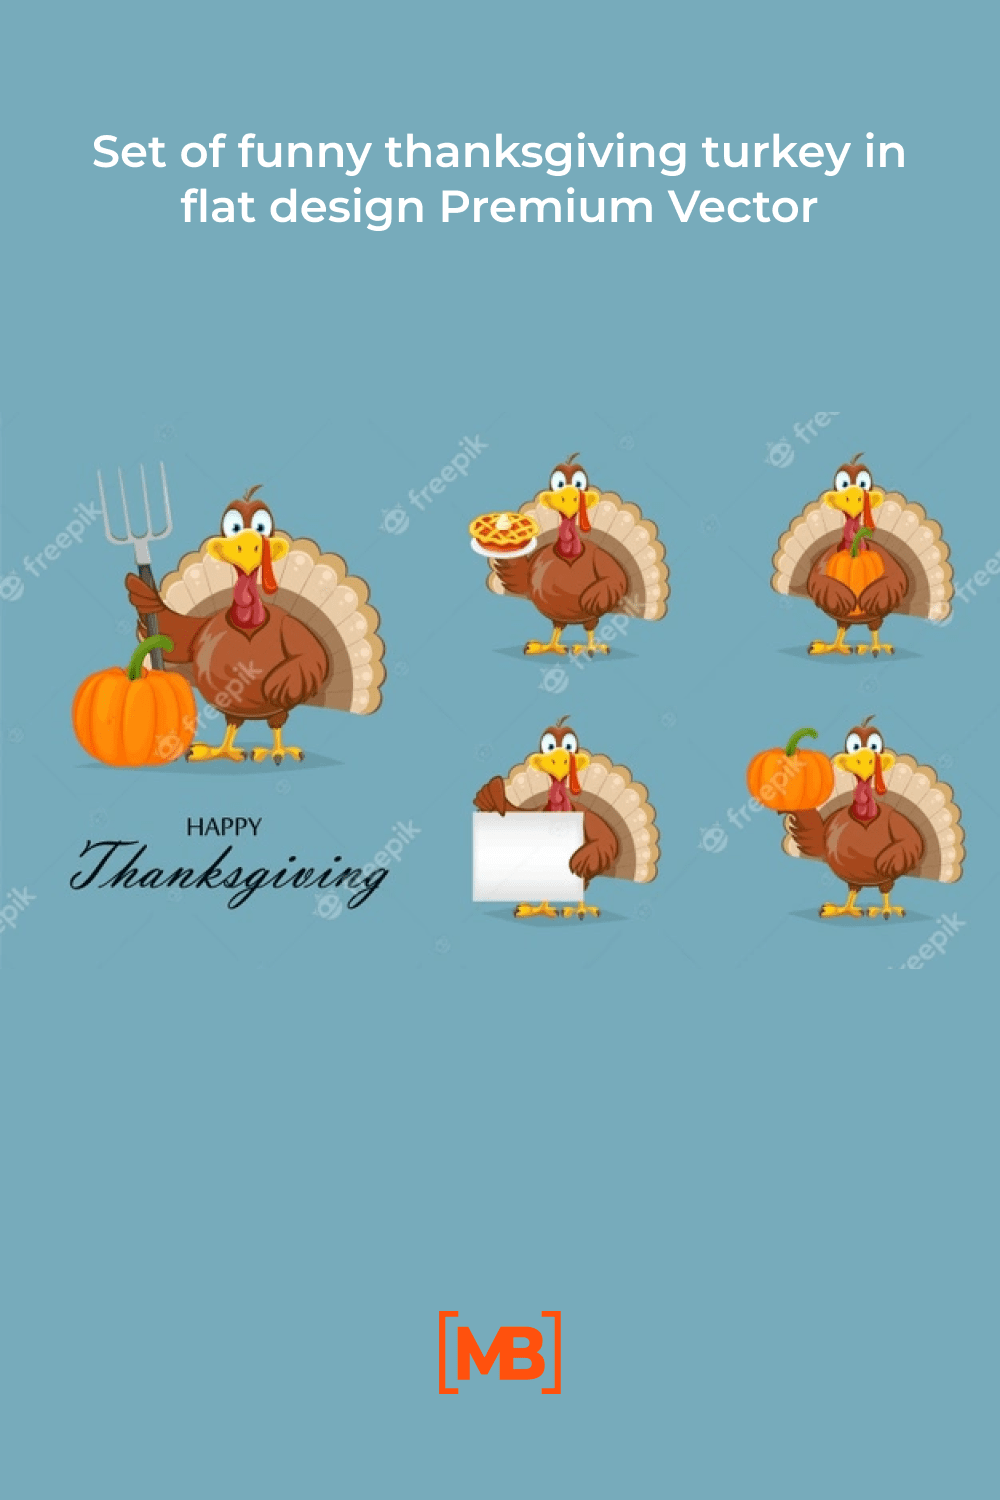 Set of funny thanksgiving turkey in flat design Premium Vector.